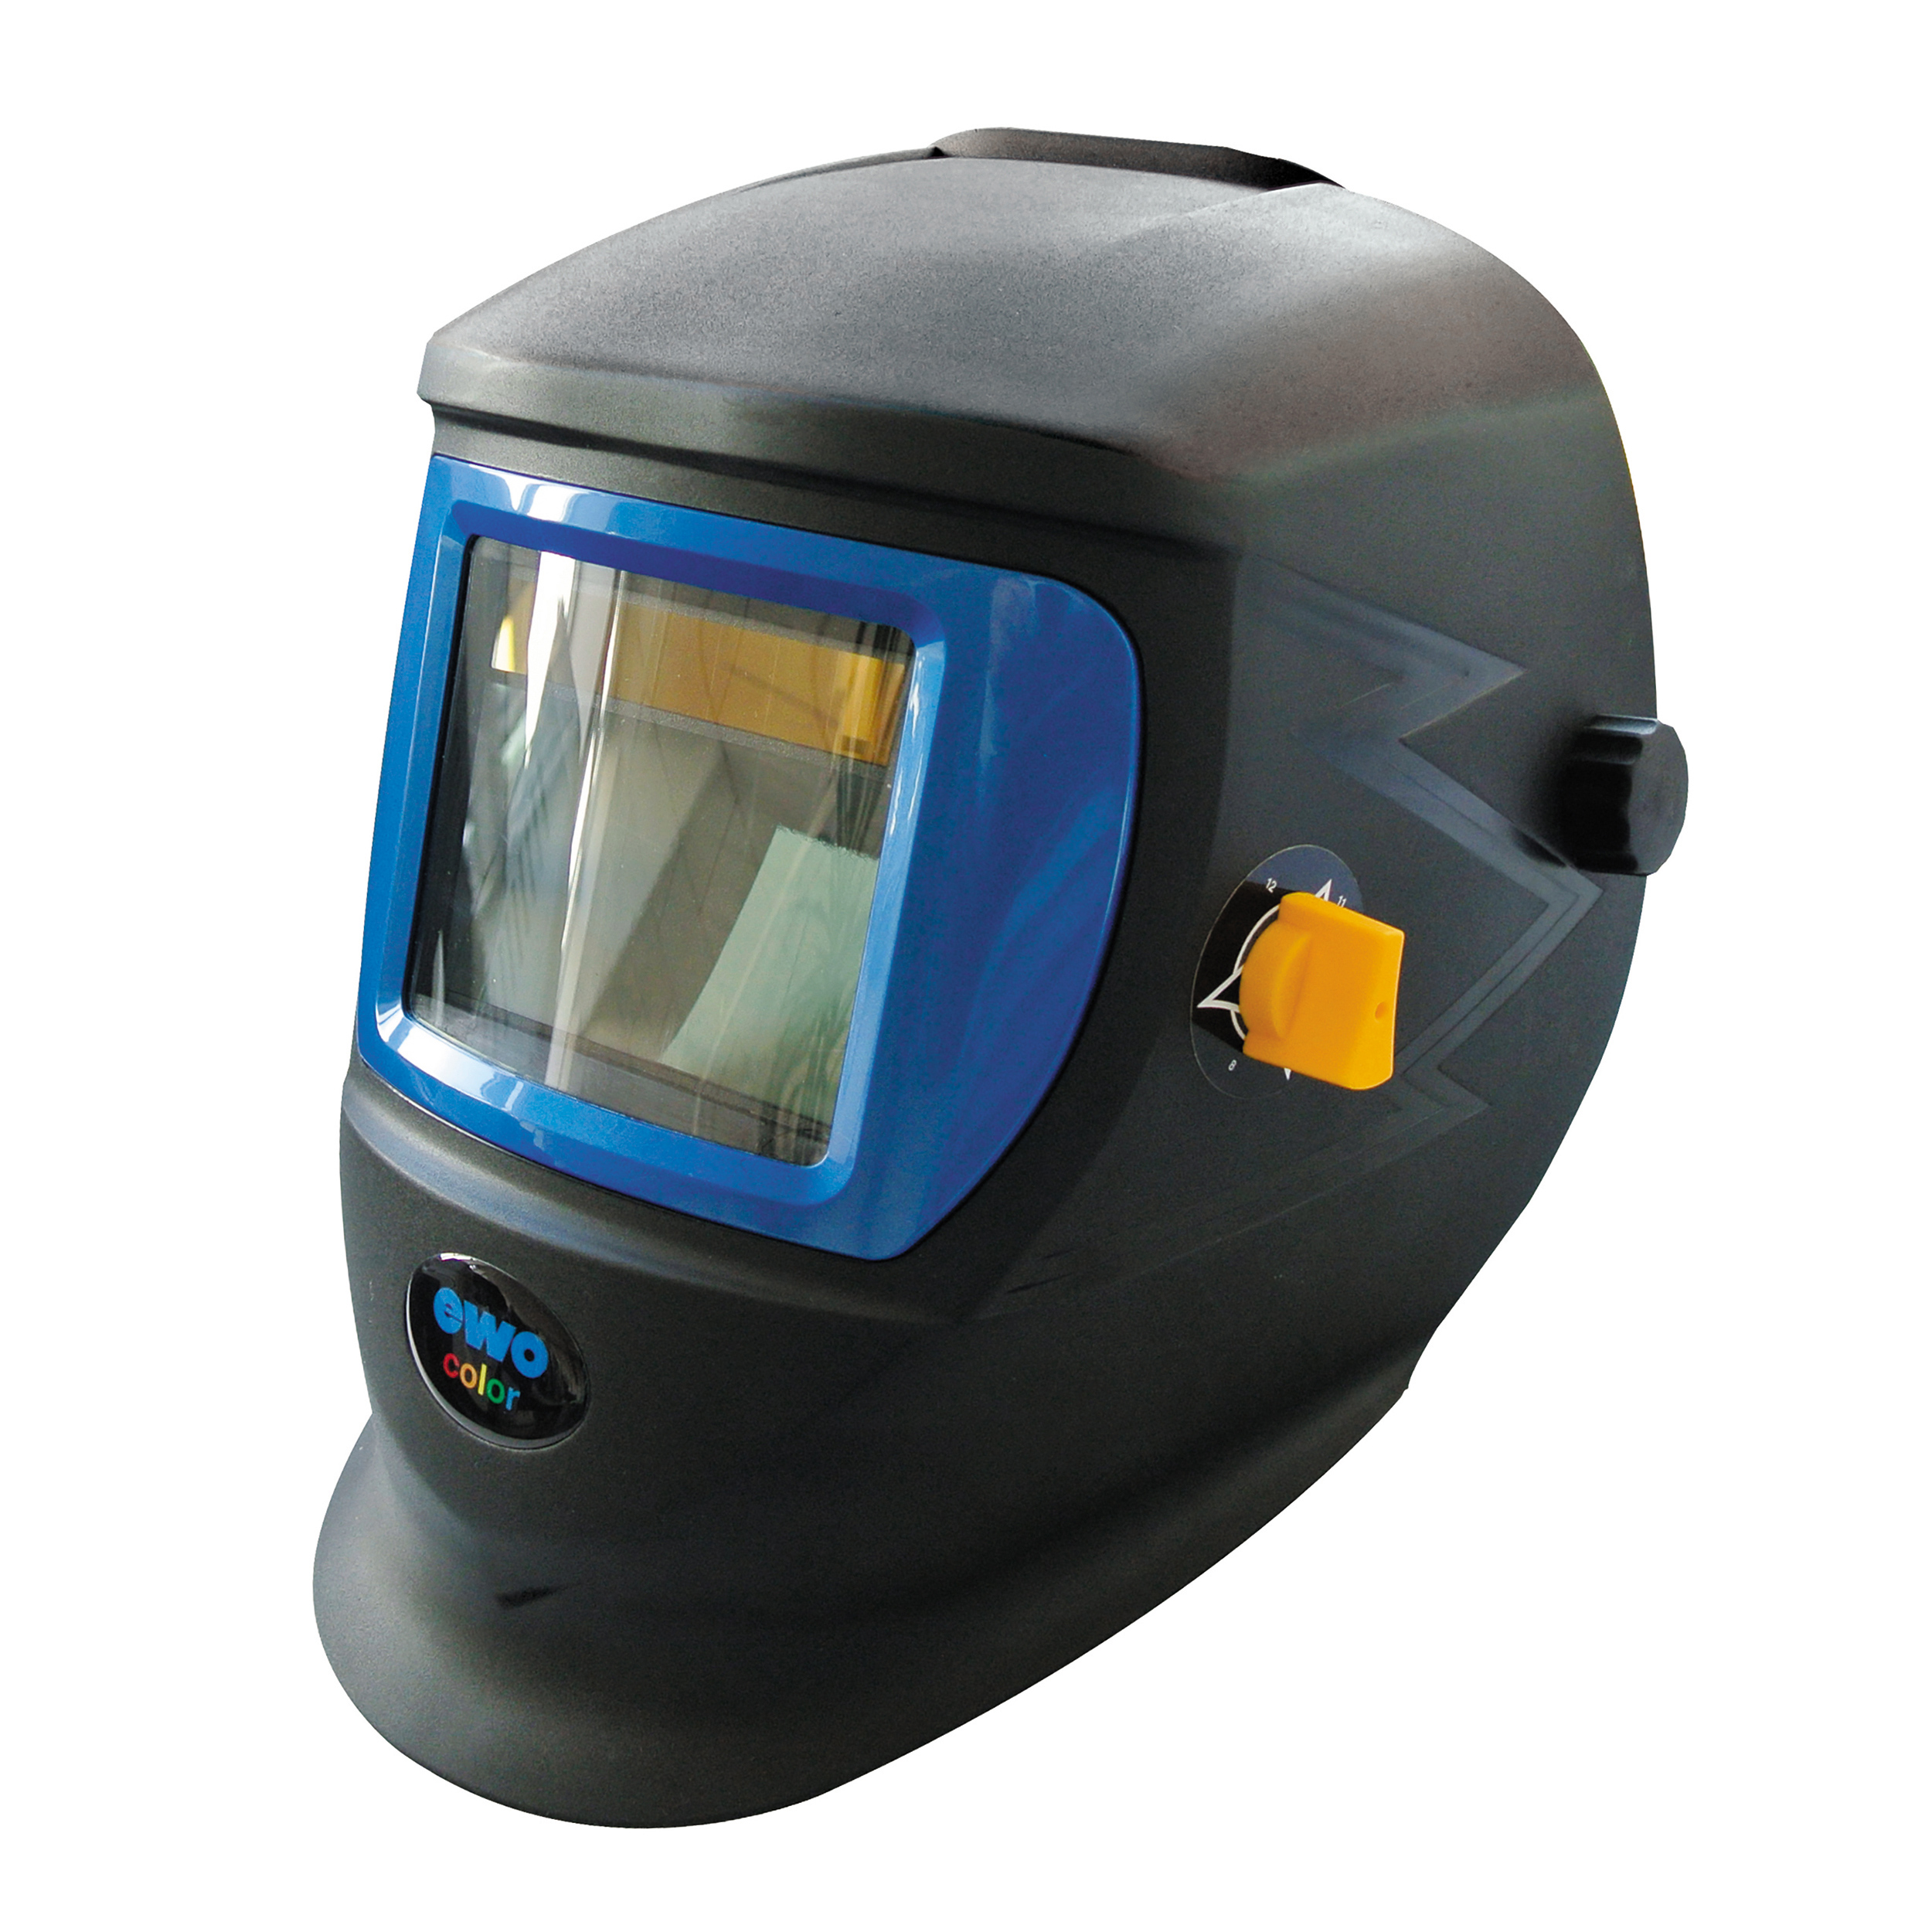 ewo-color, electro-optic welding helmet for fadeless sight